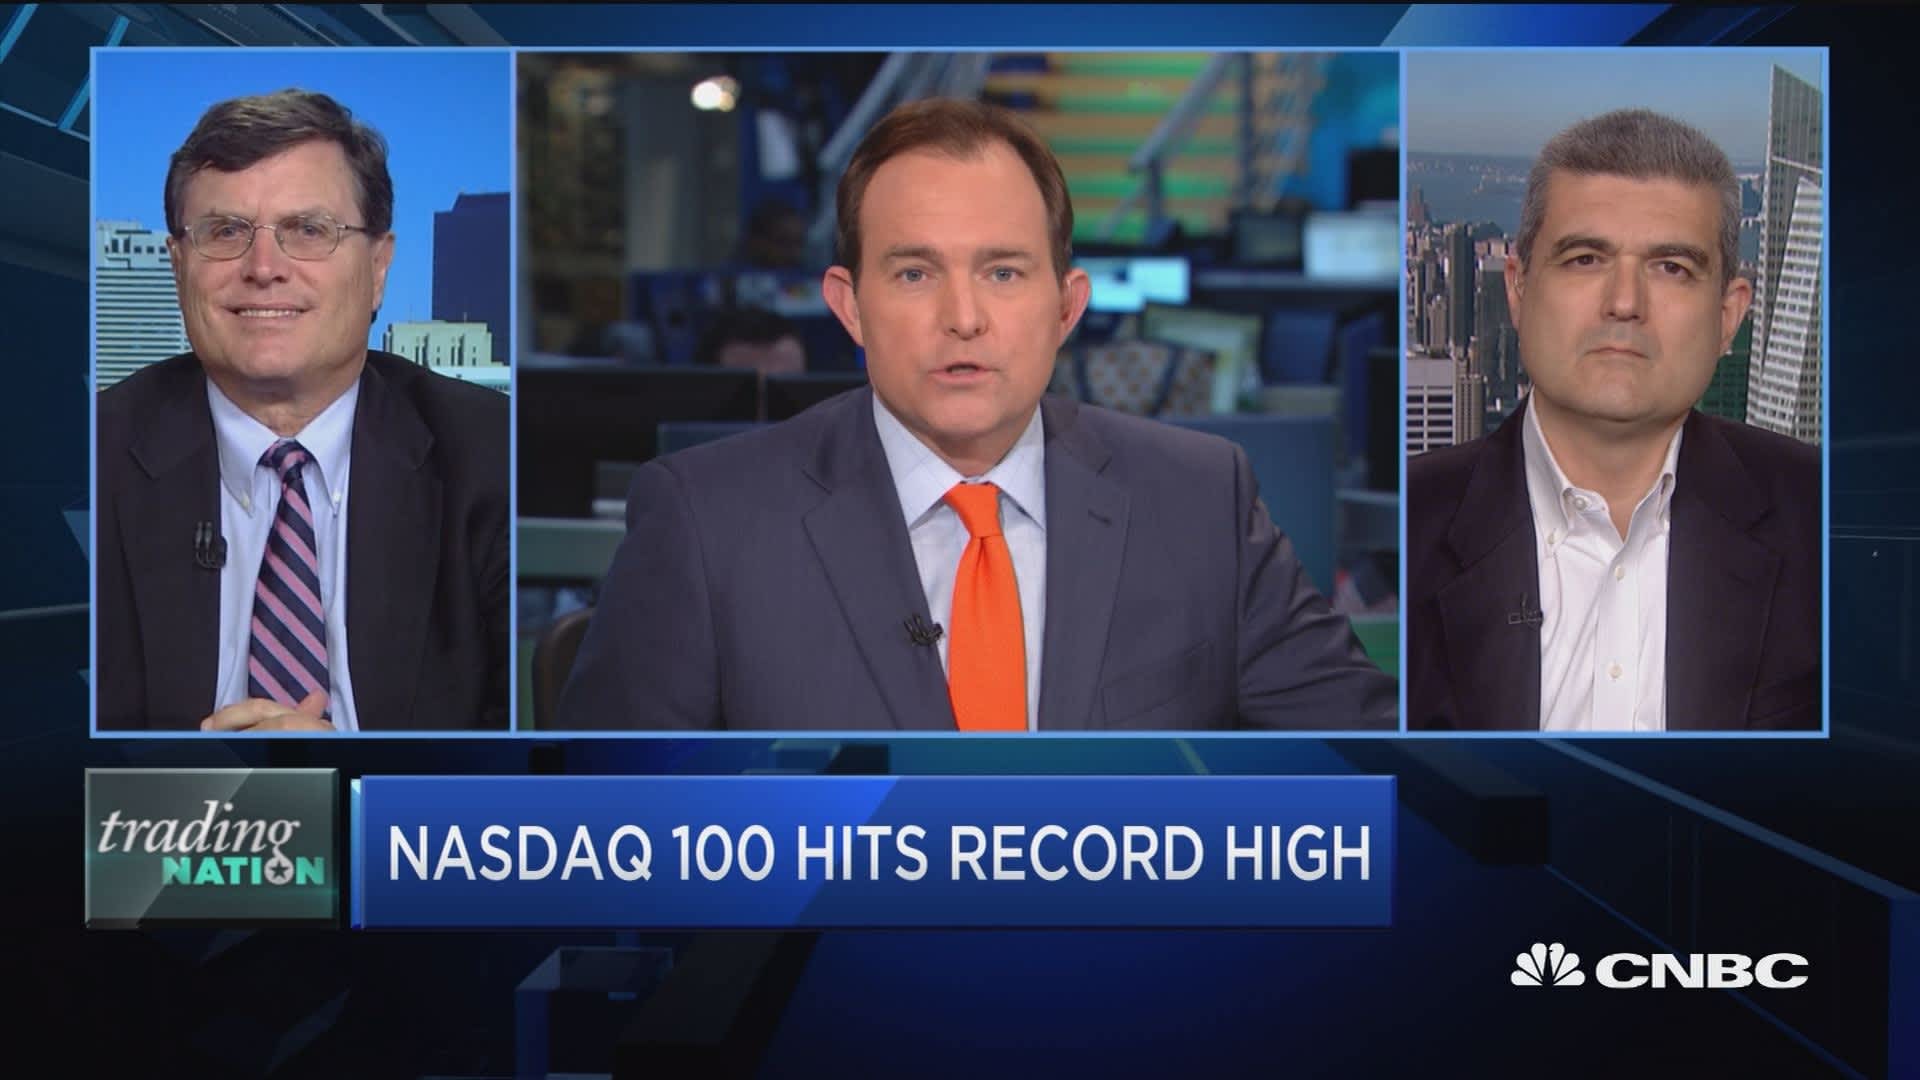 Trading Nation: Nasdaq 100 hits record high